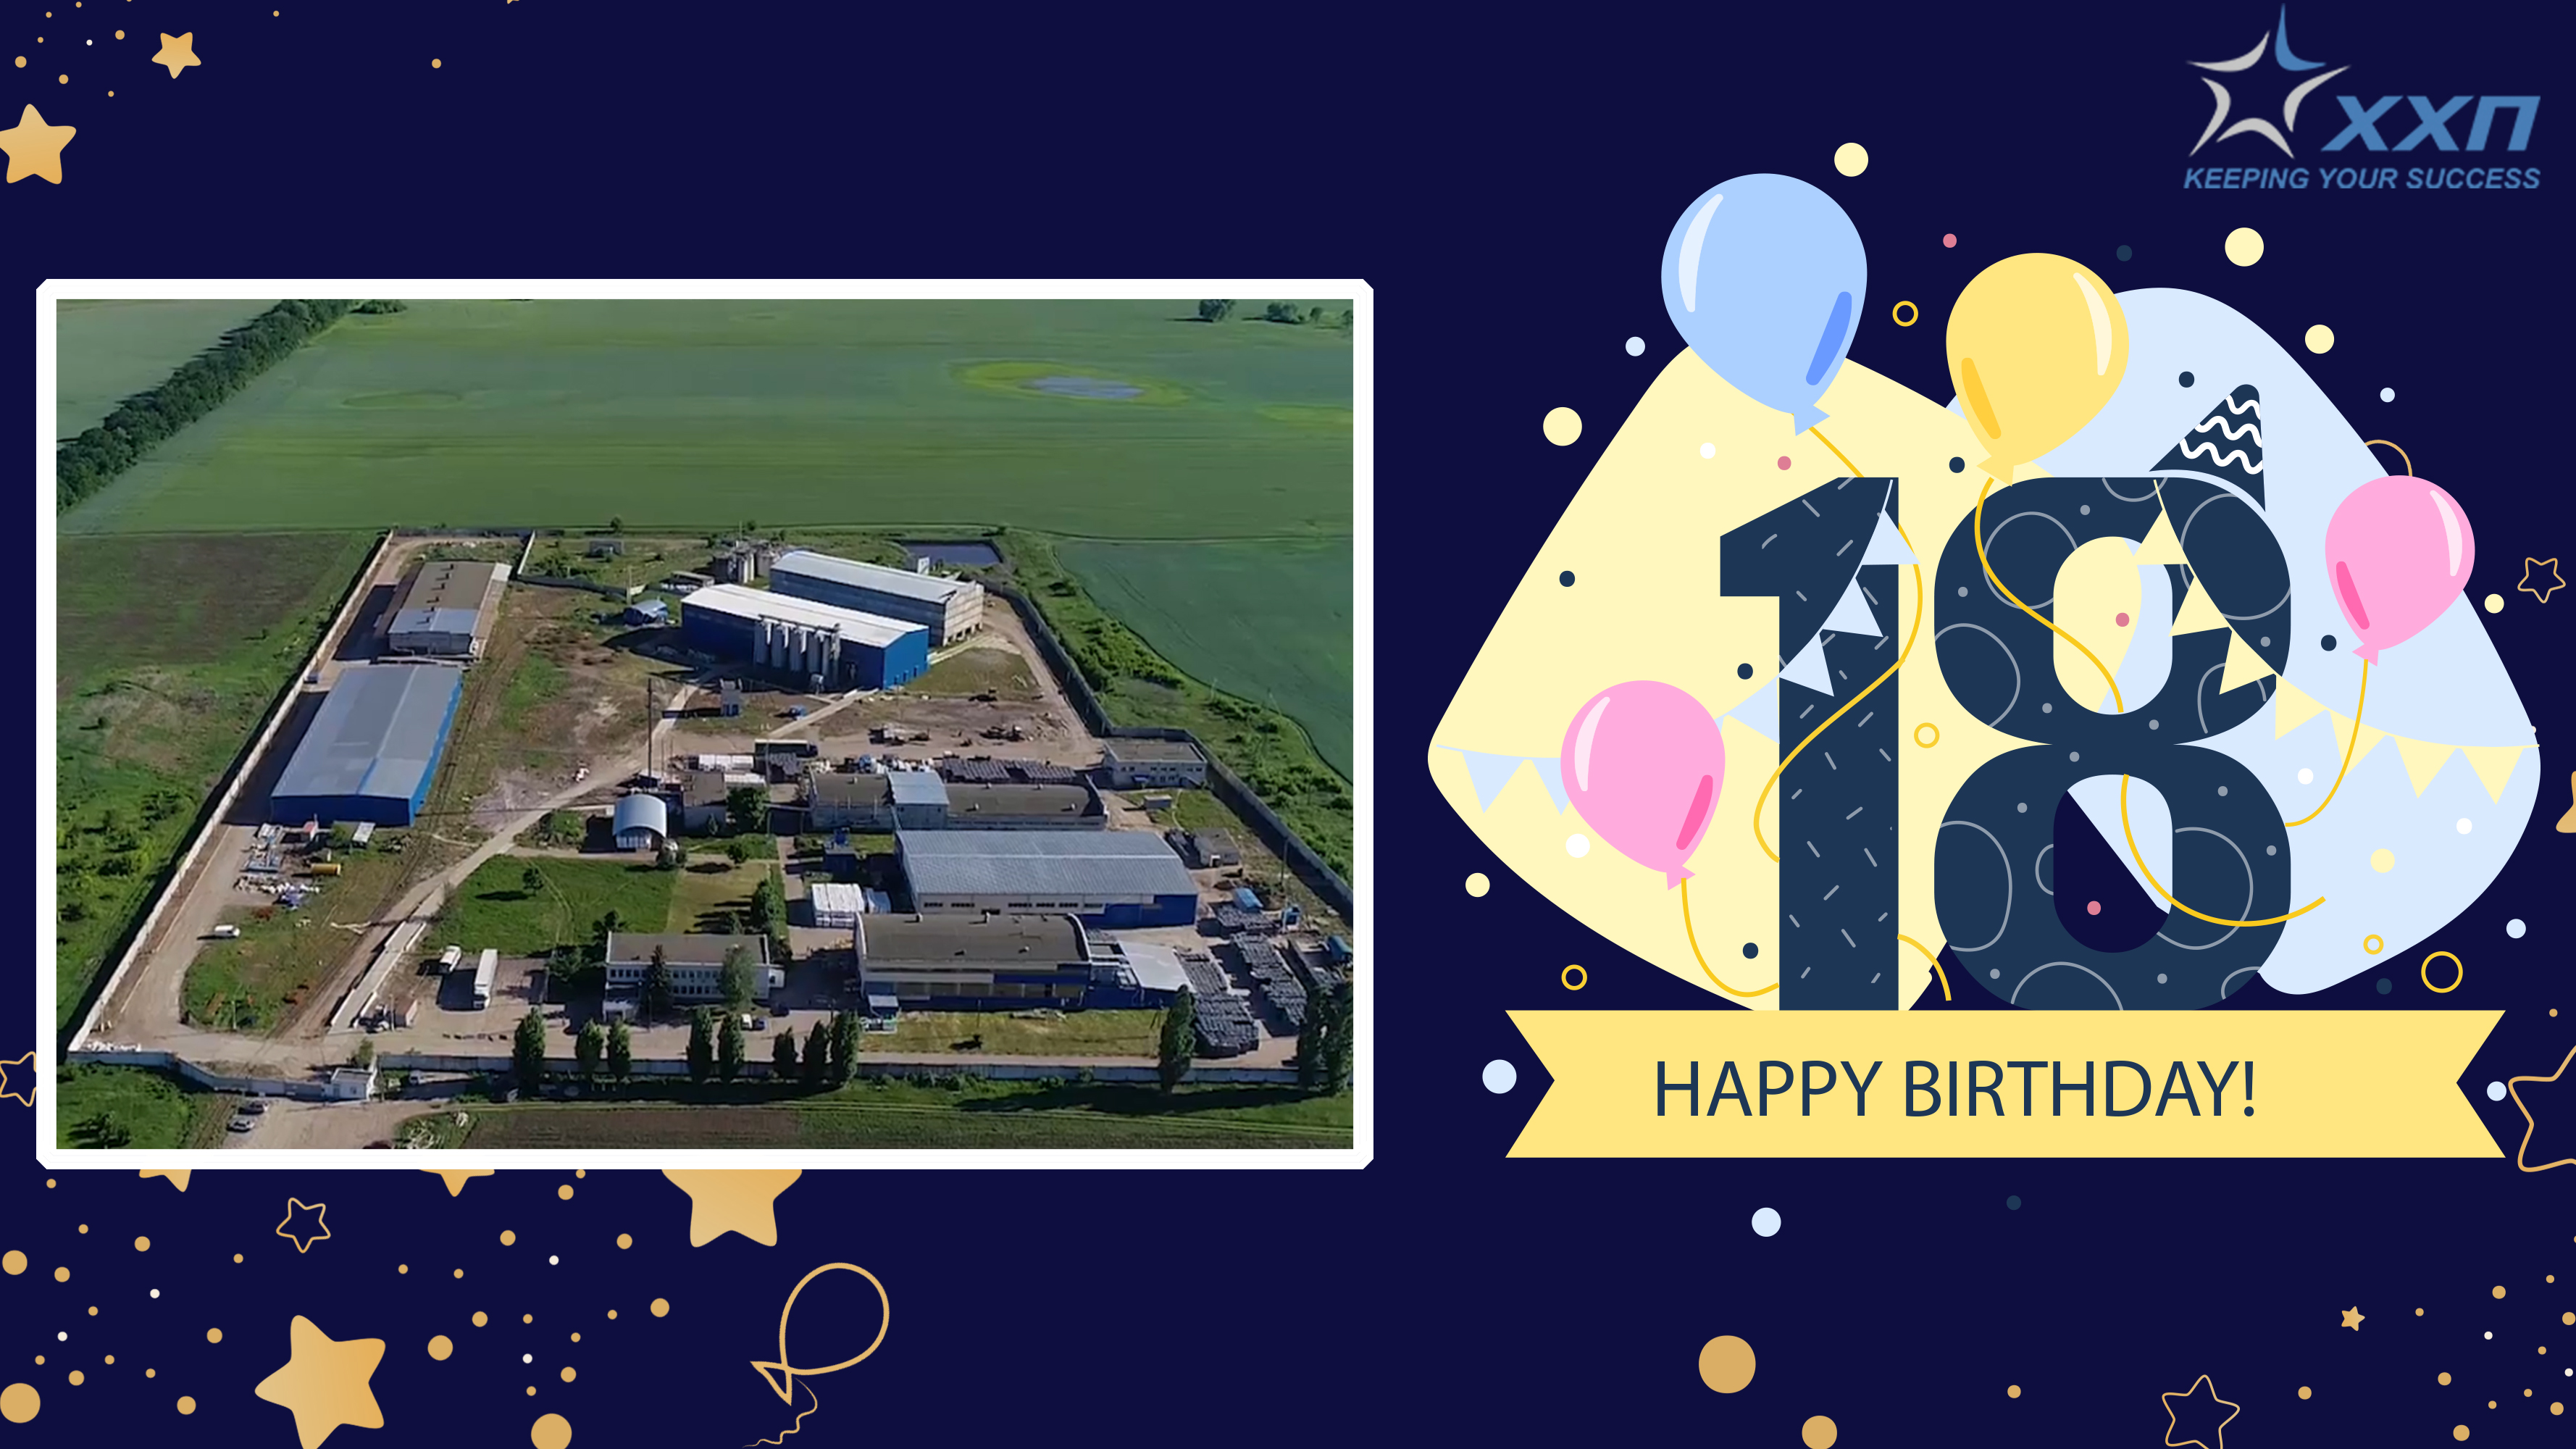 Happy Birthday, Kharkiv Himprom Ltd! 